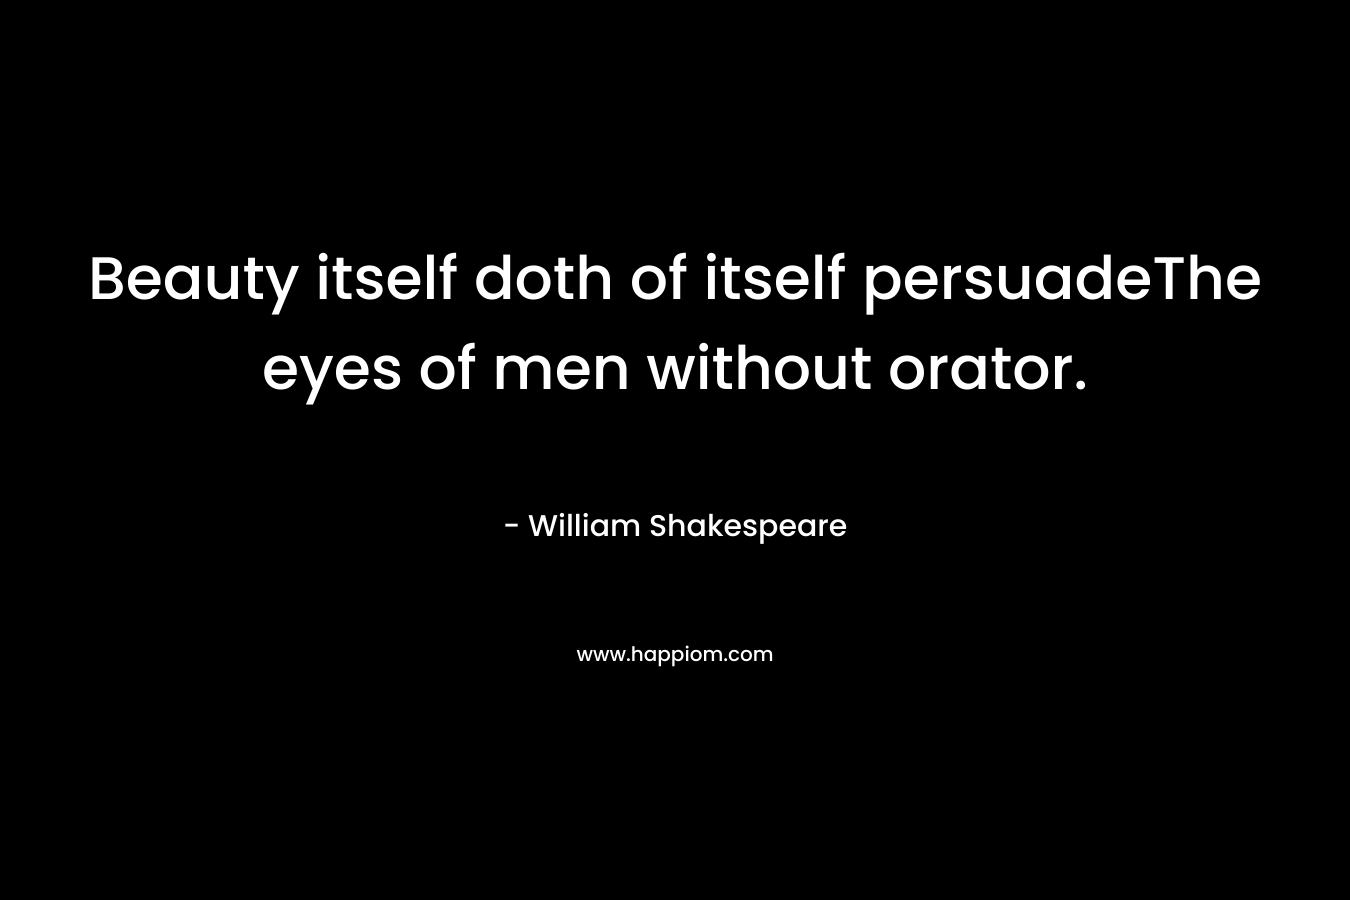 Beauty itself doth of itself persuadeThe eyes of men without orator.